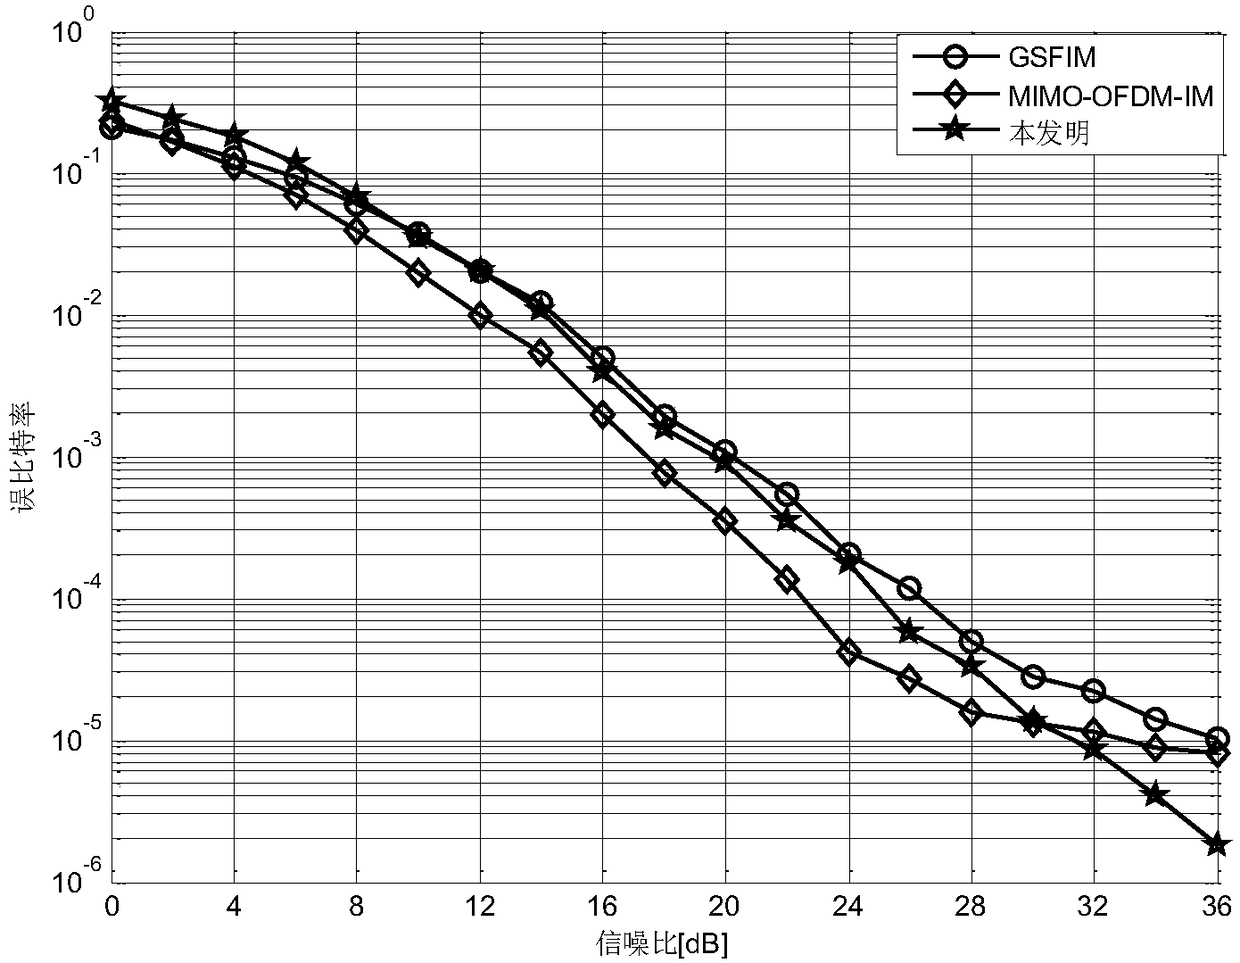 Multi-antenna ofdm index modulation method based on cyclic shift